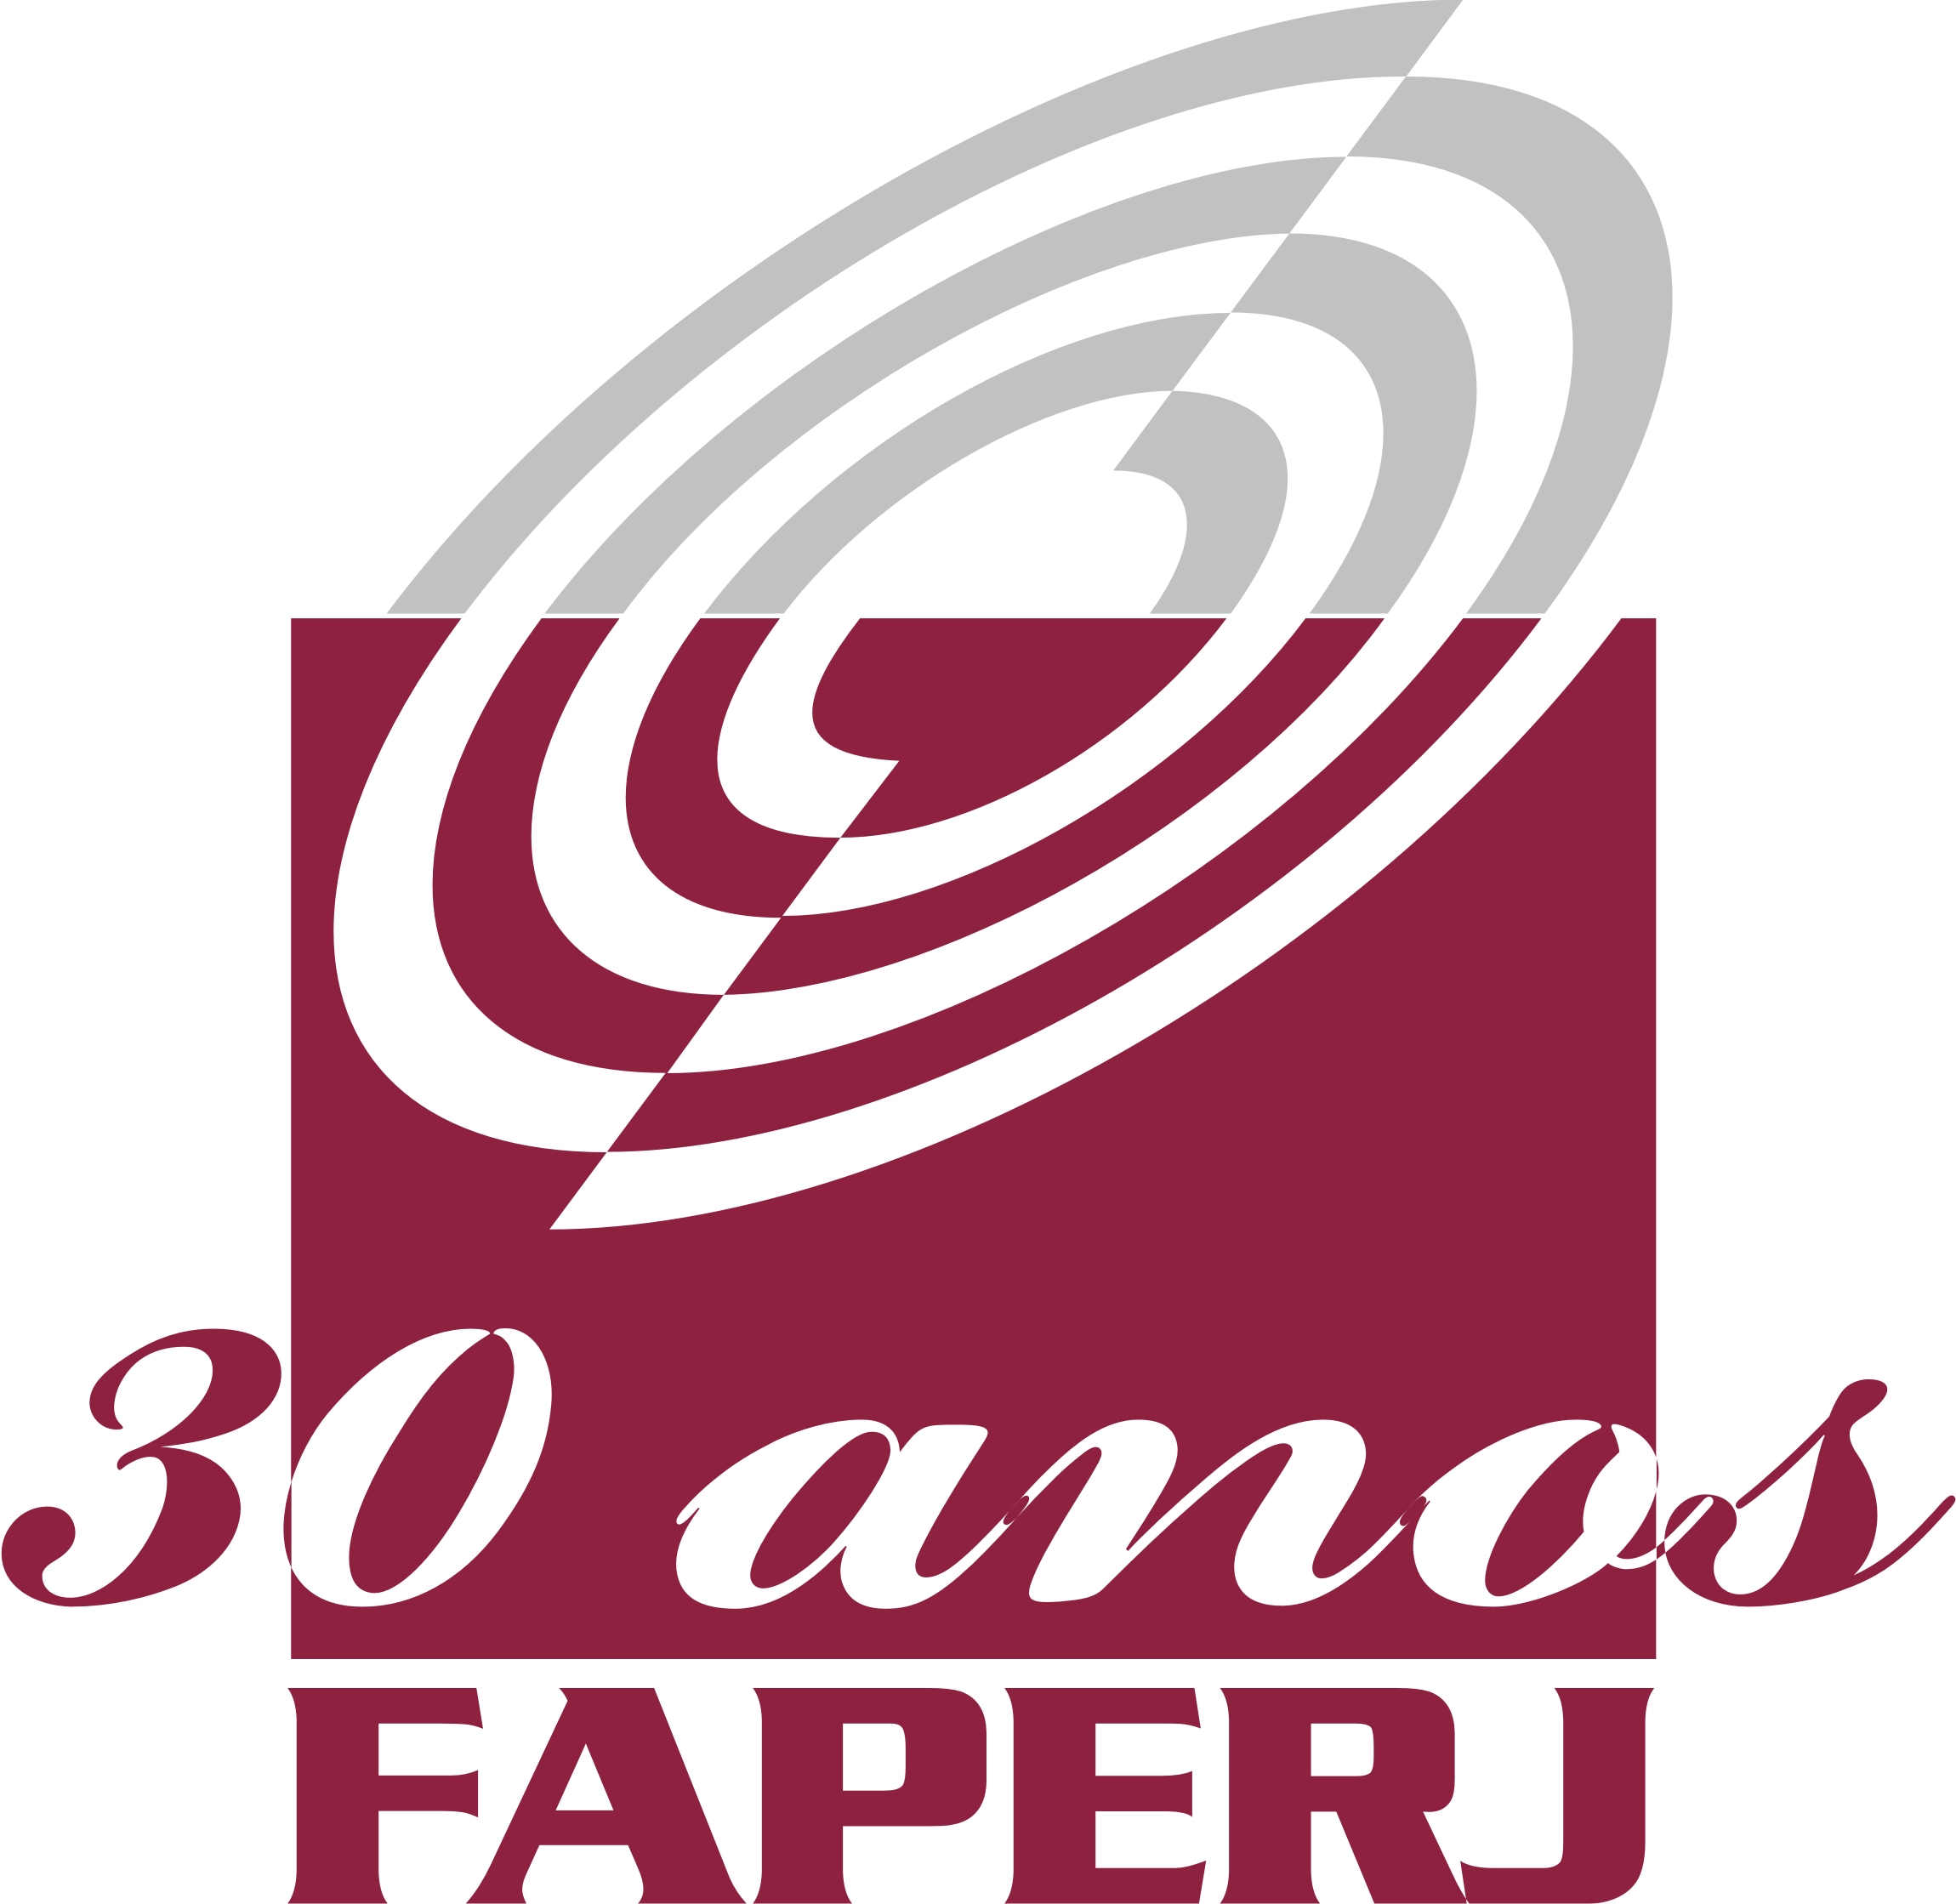 http://www.faperj.br/downloads/logomarcas/logo_faperj_30_ANOS_cor.jpg